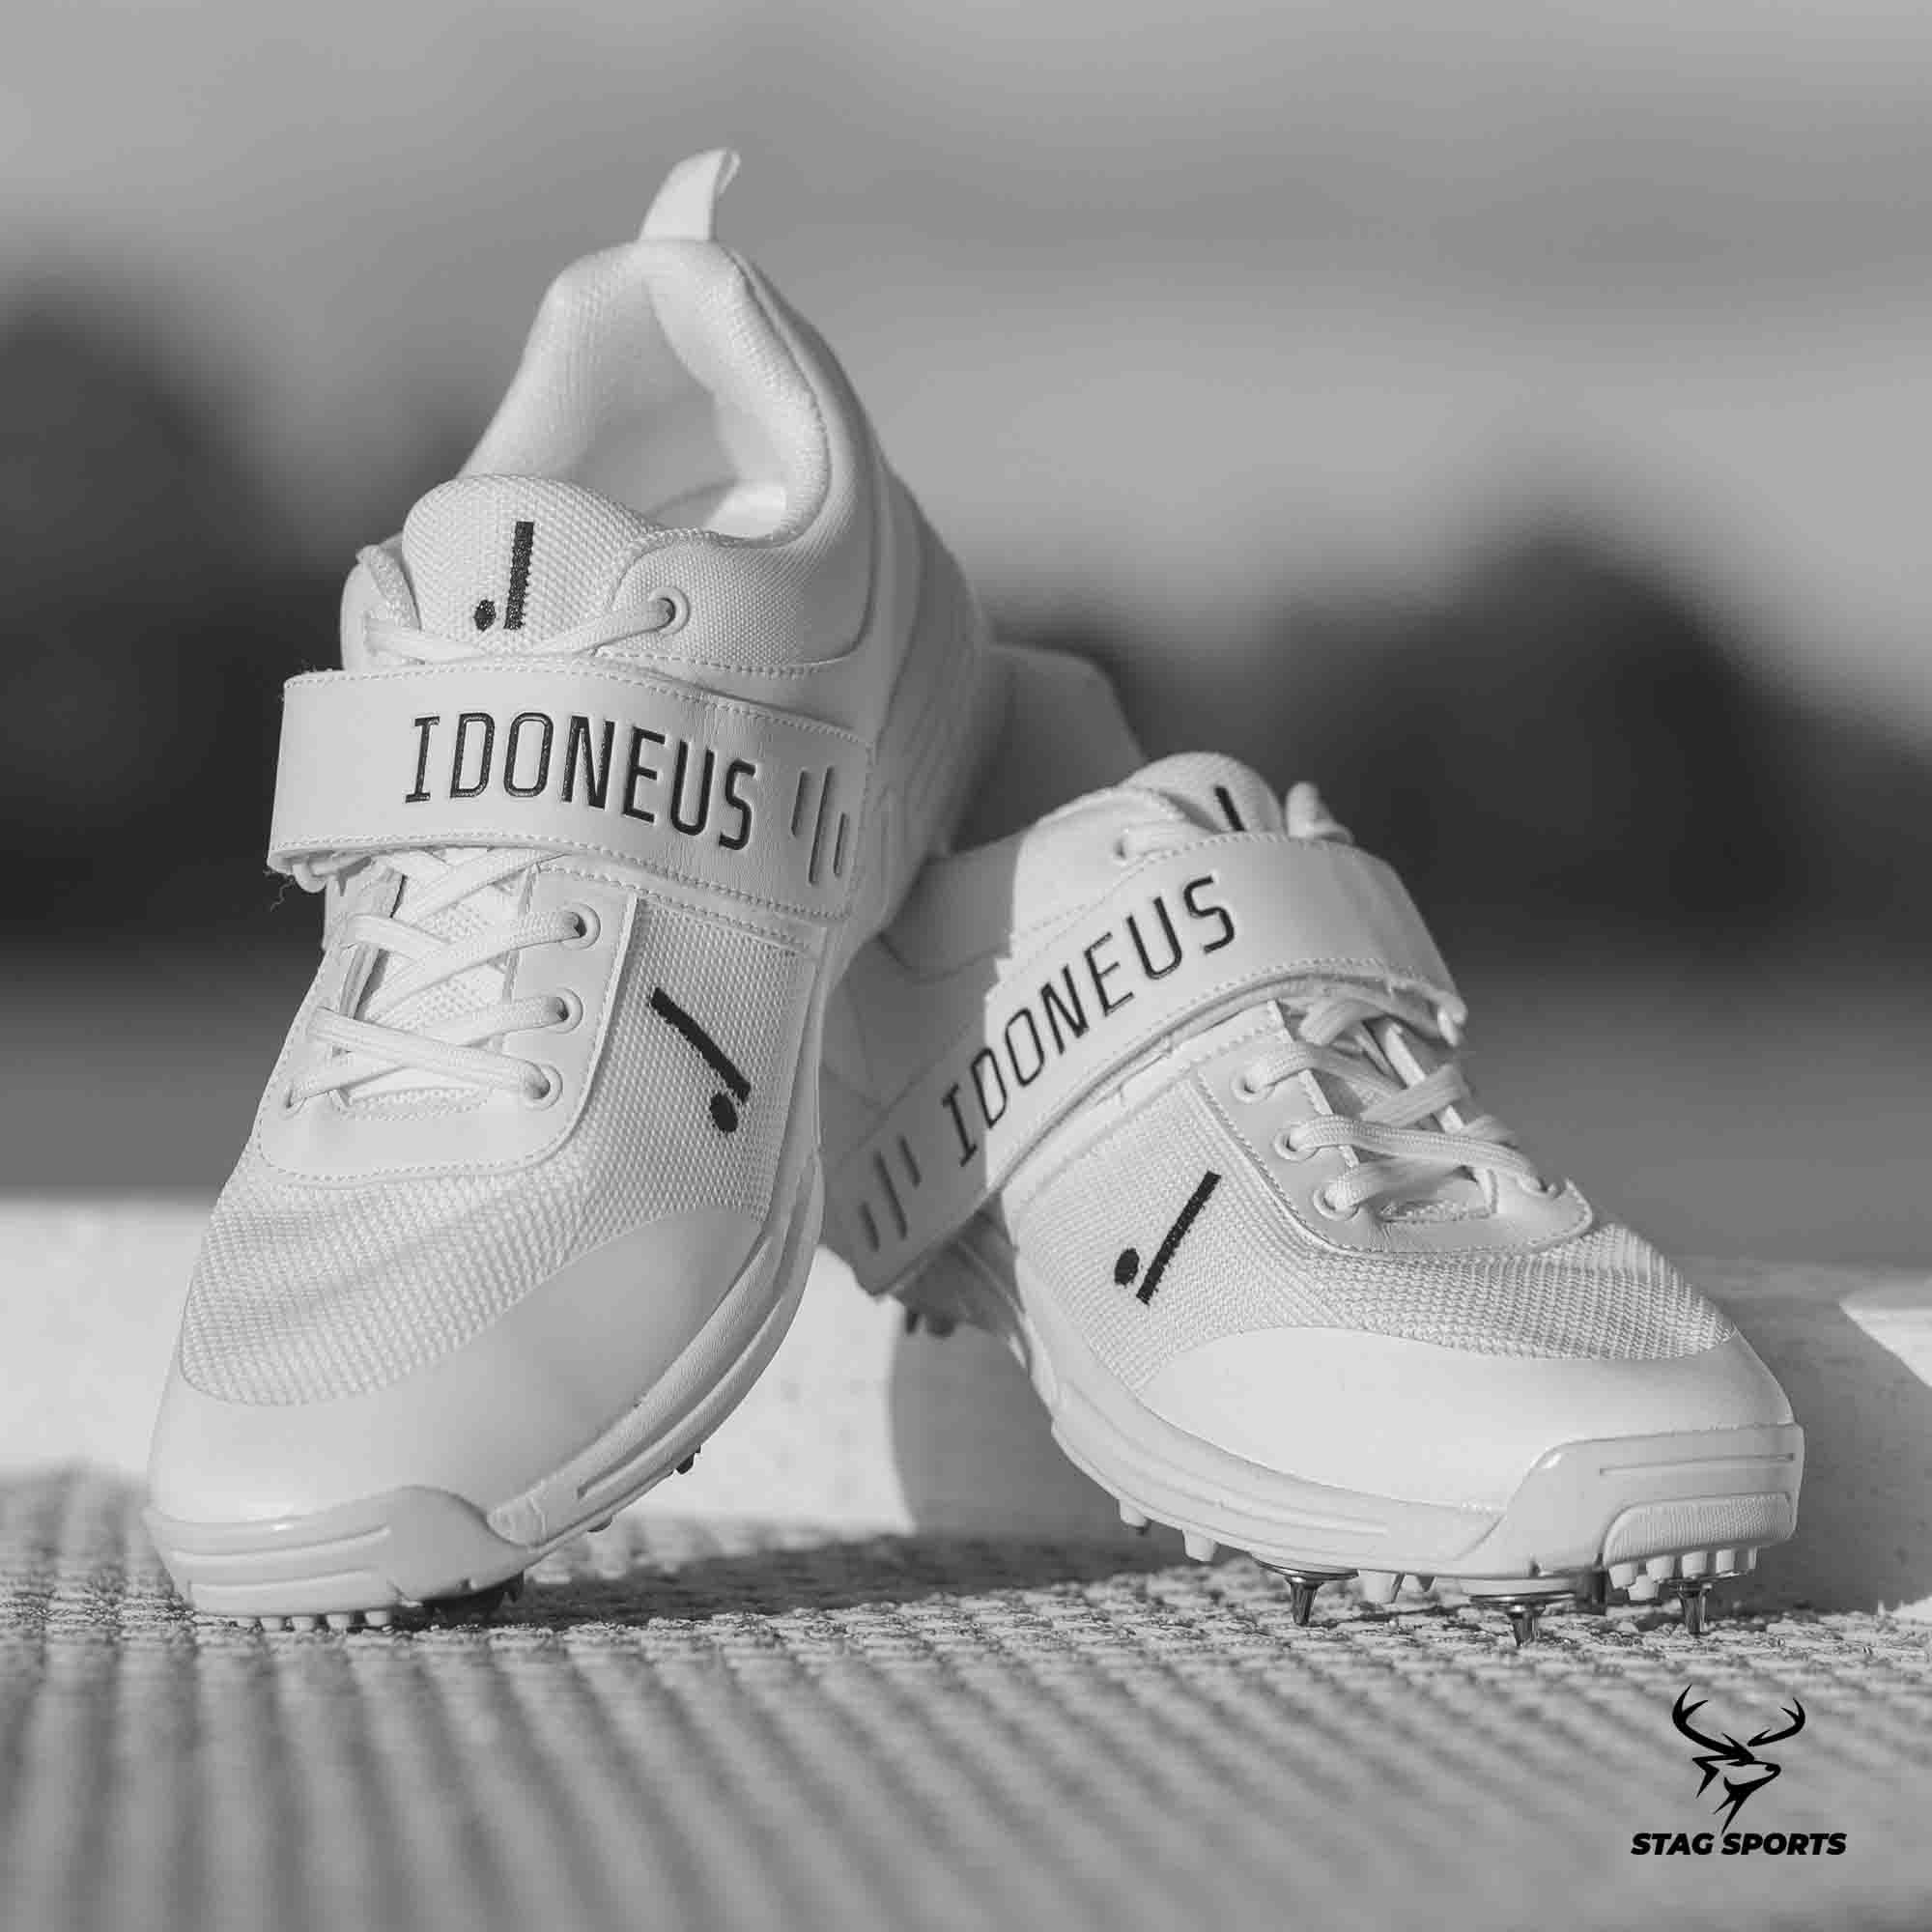 Idoneus-Cricket-Shoes-4.jpg